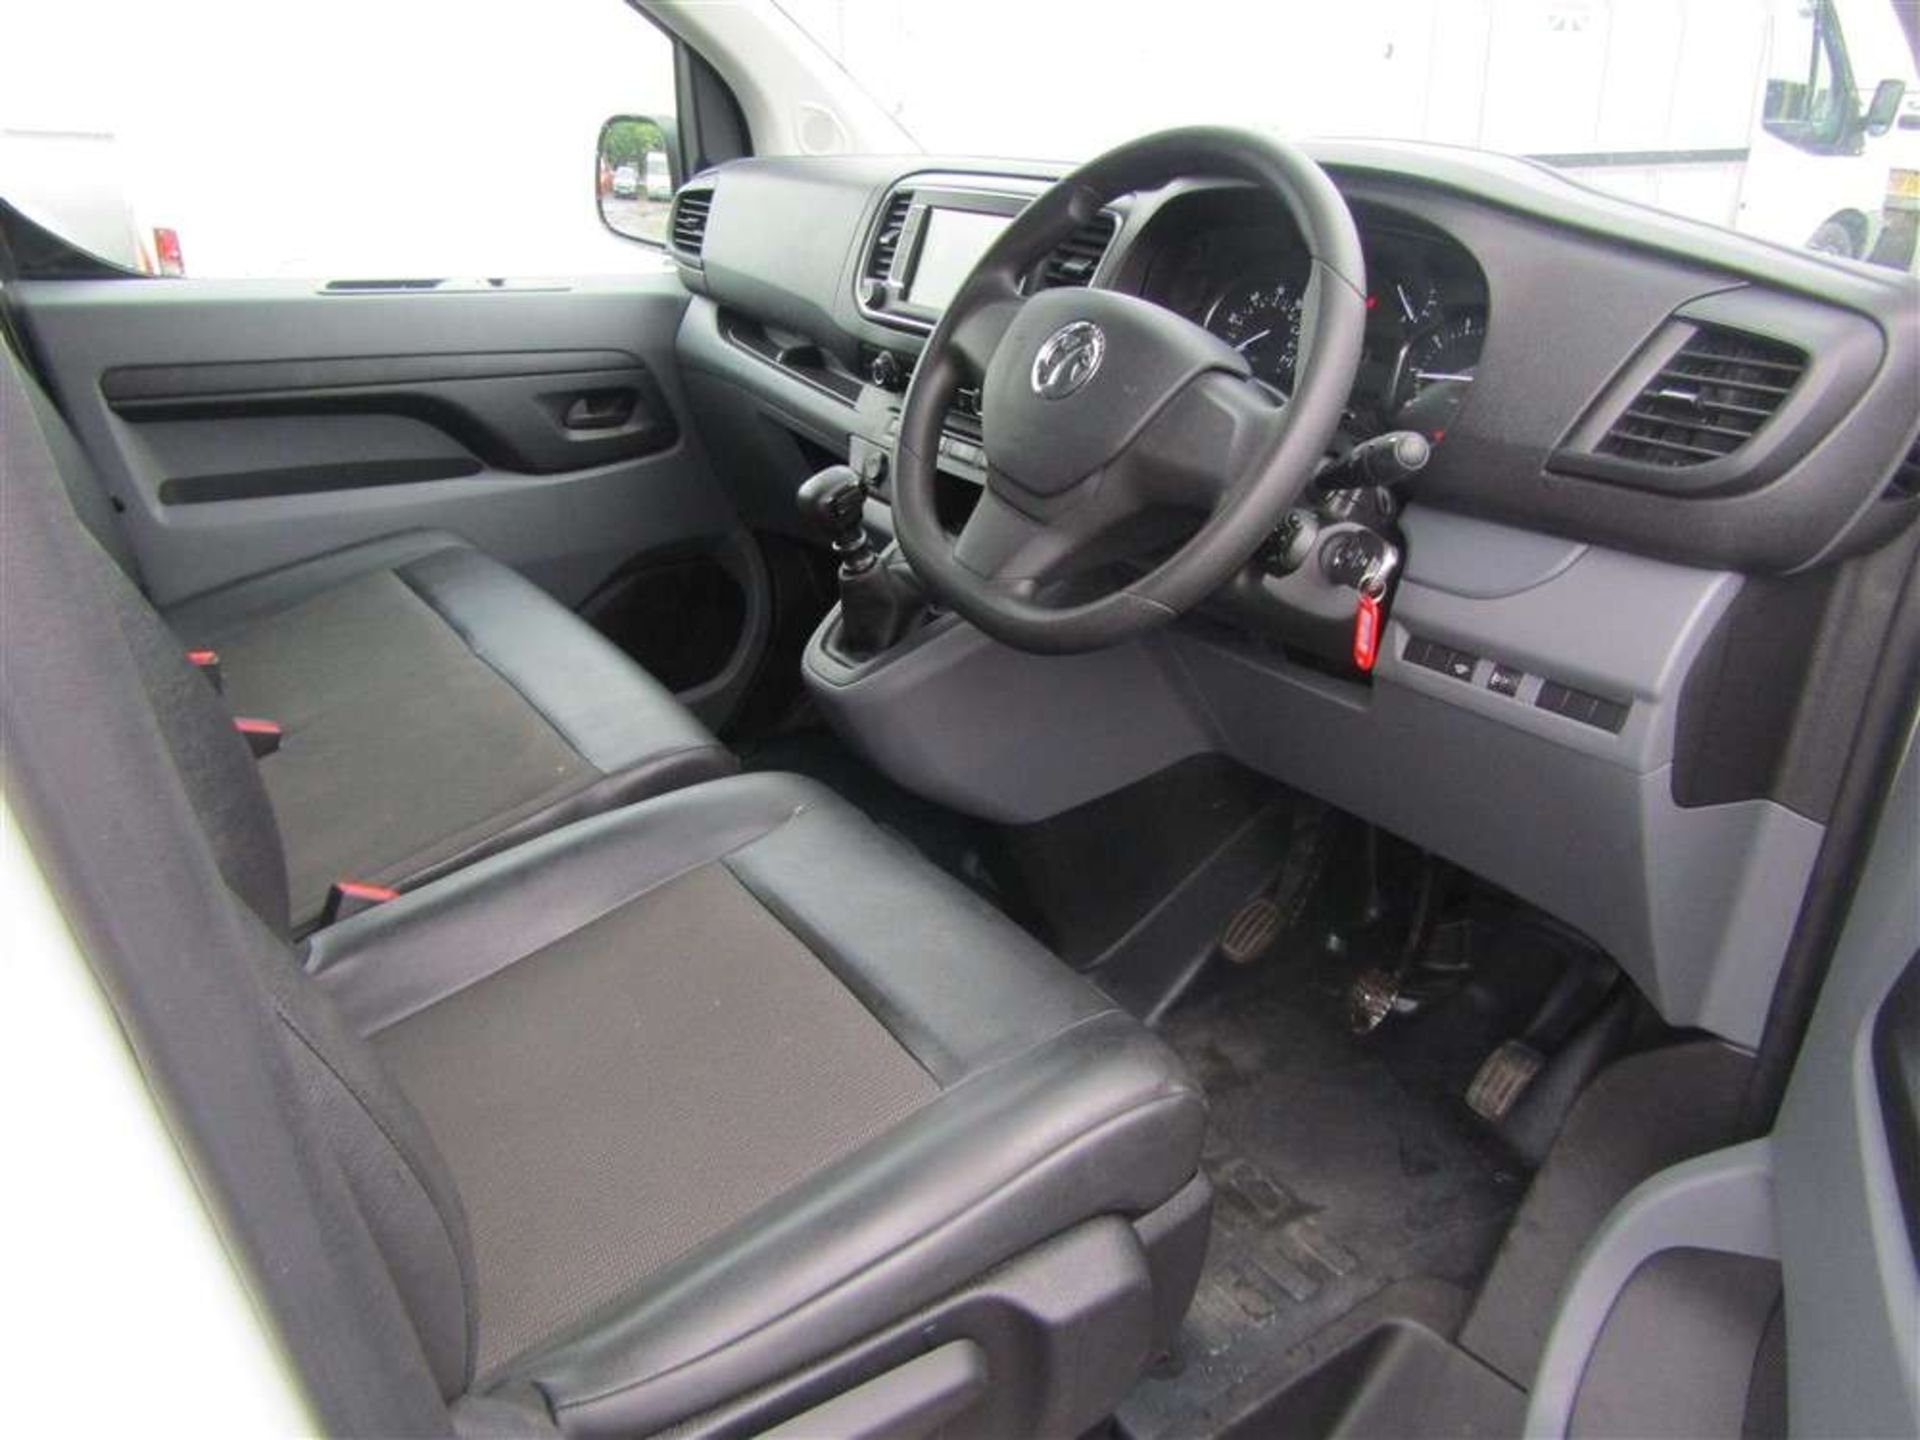 2021 21 reg Vauxhall Vivaro 2900 Dynamic (Only 43918 miles) - Image 6 of 7